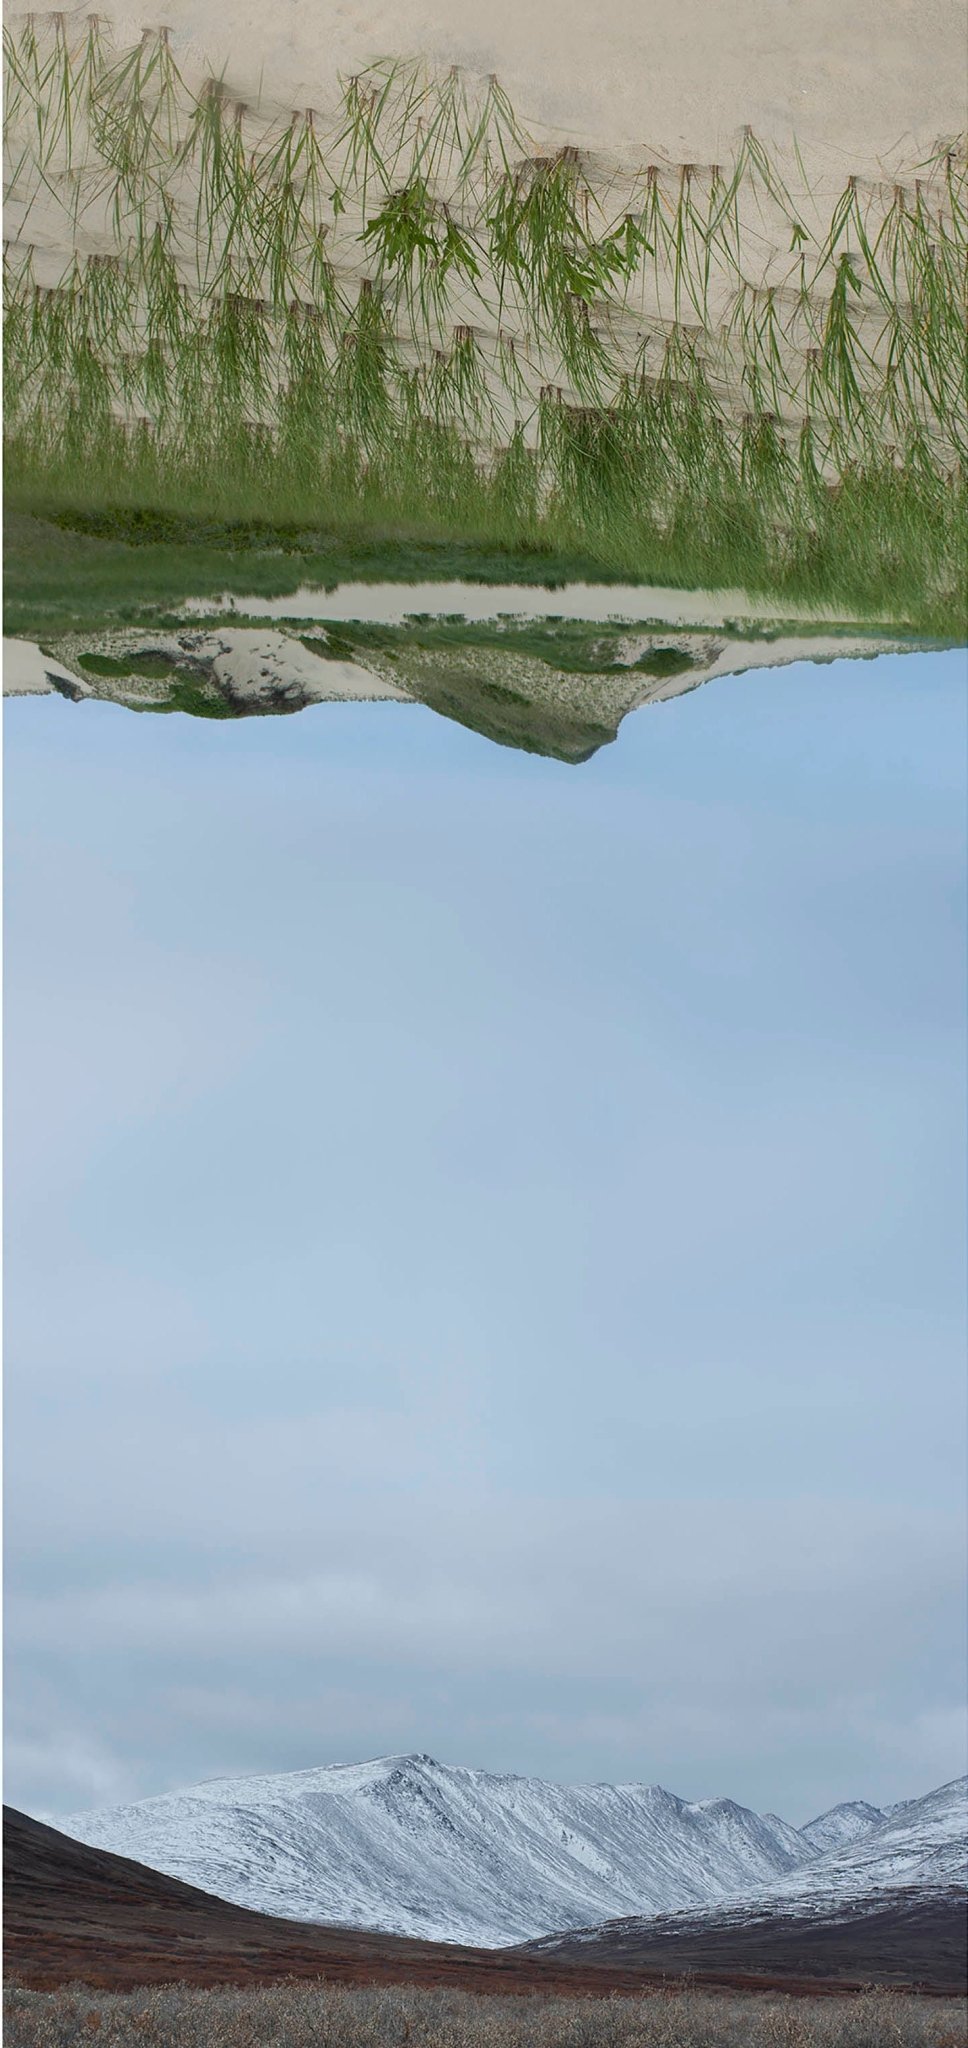 "Pipelines and Permafrost" collages - marymattinglystudio